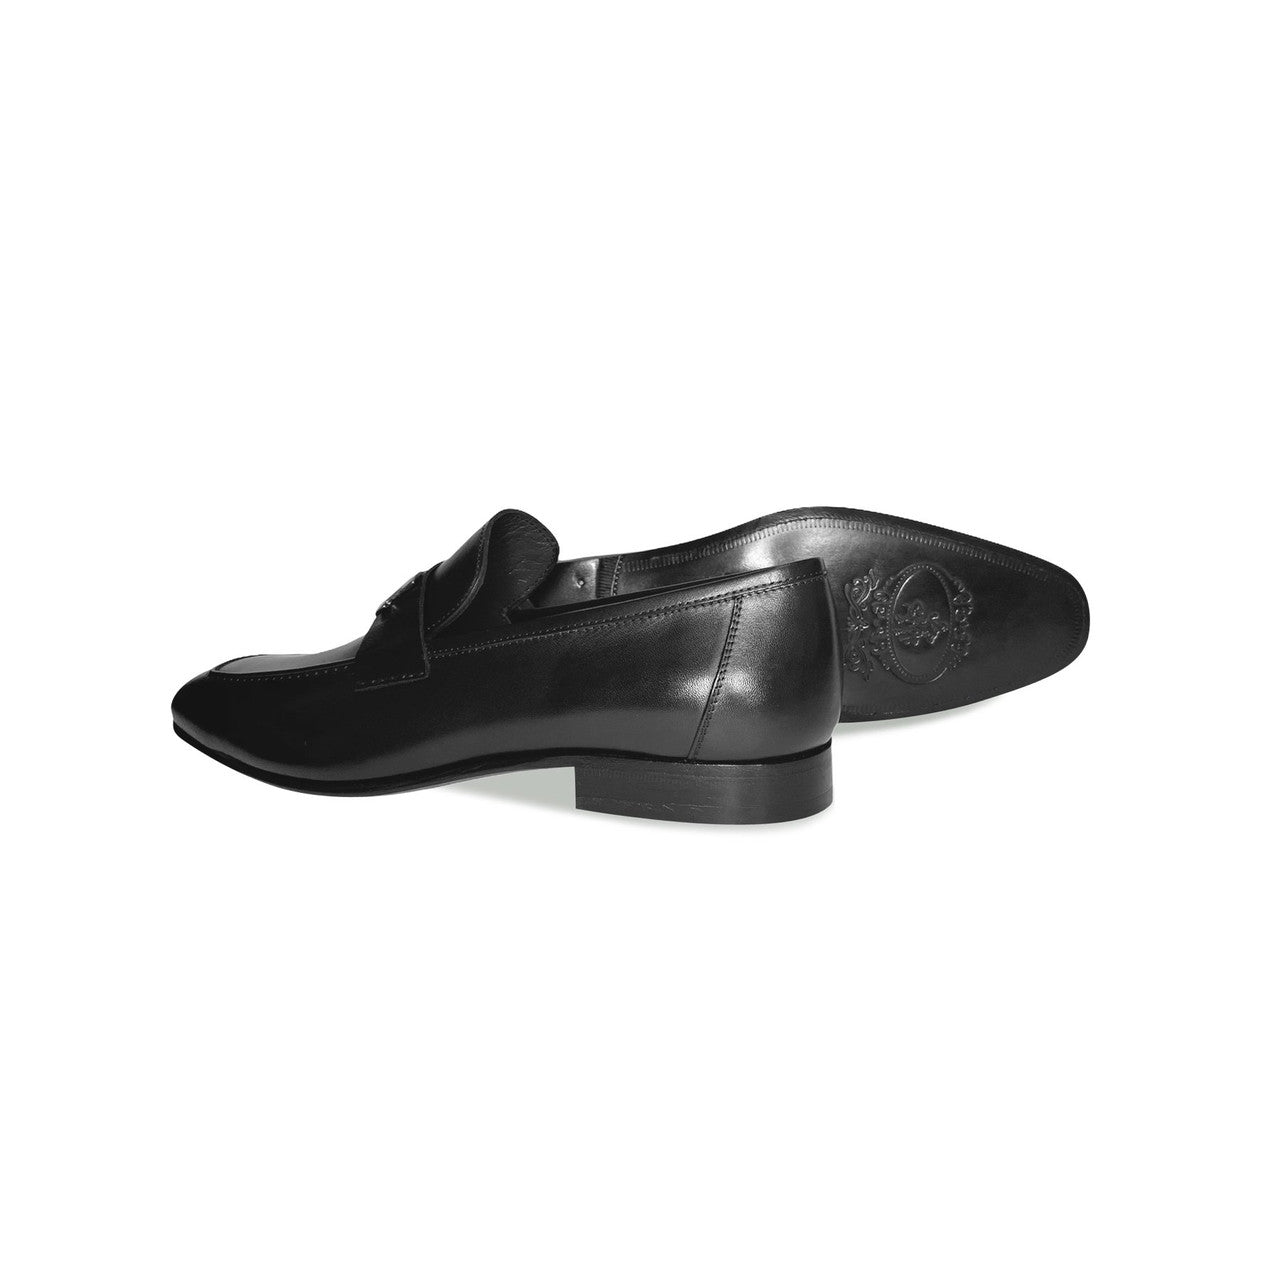 Corrente 5760 H Buckle loafer Shoes - Black